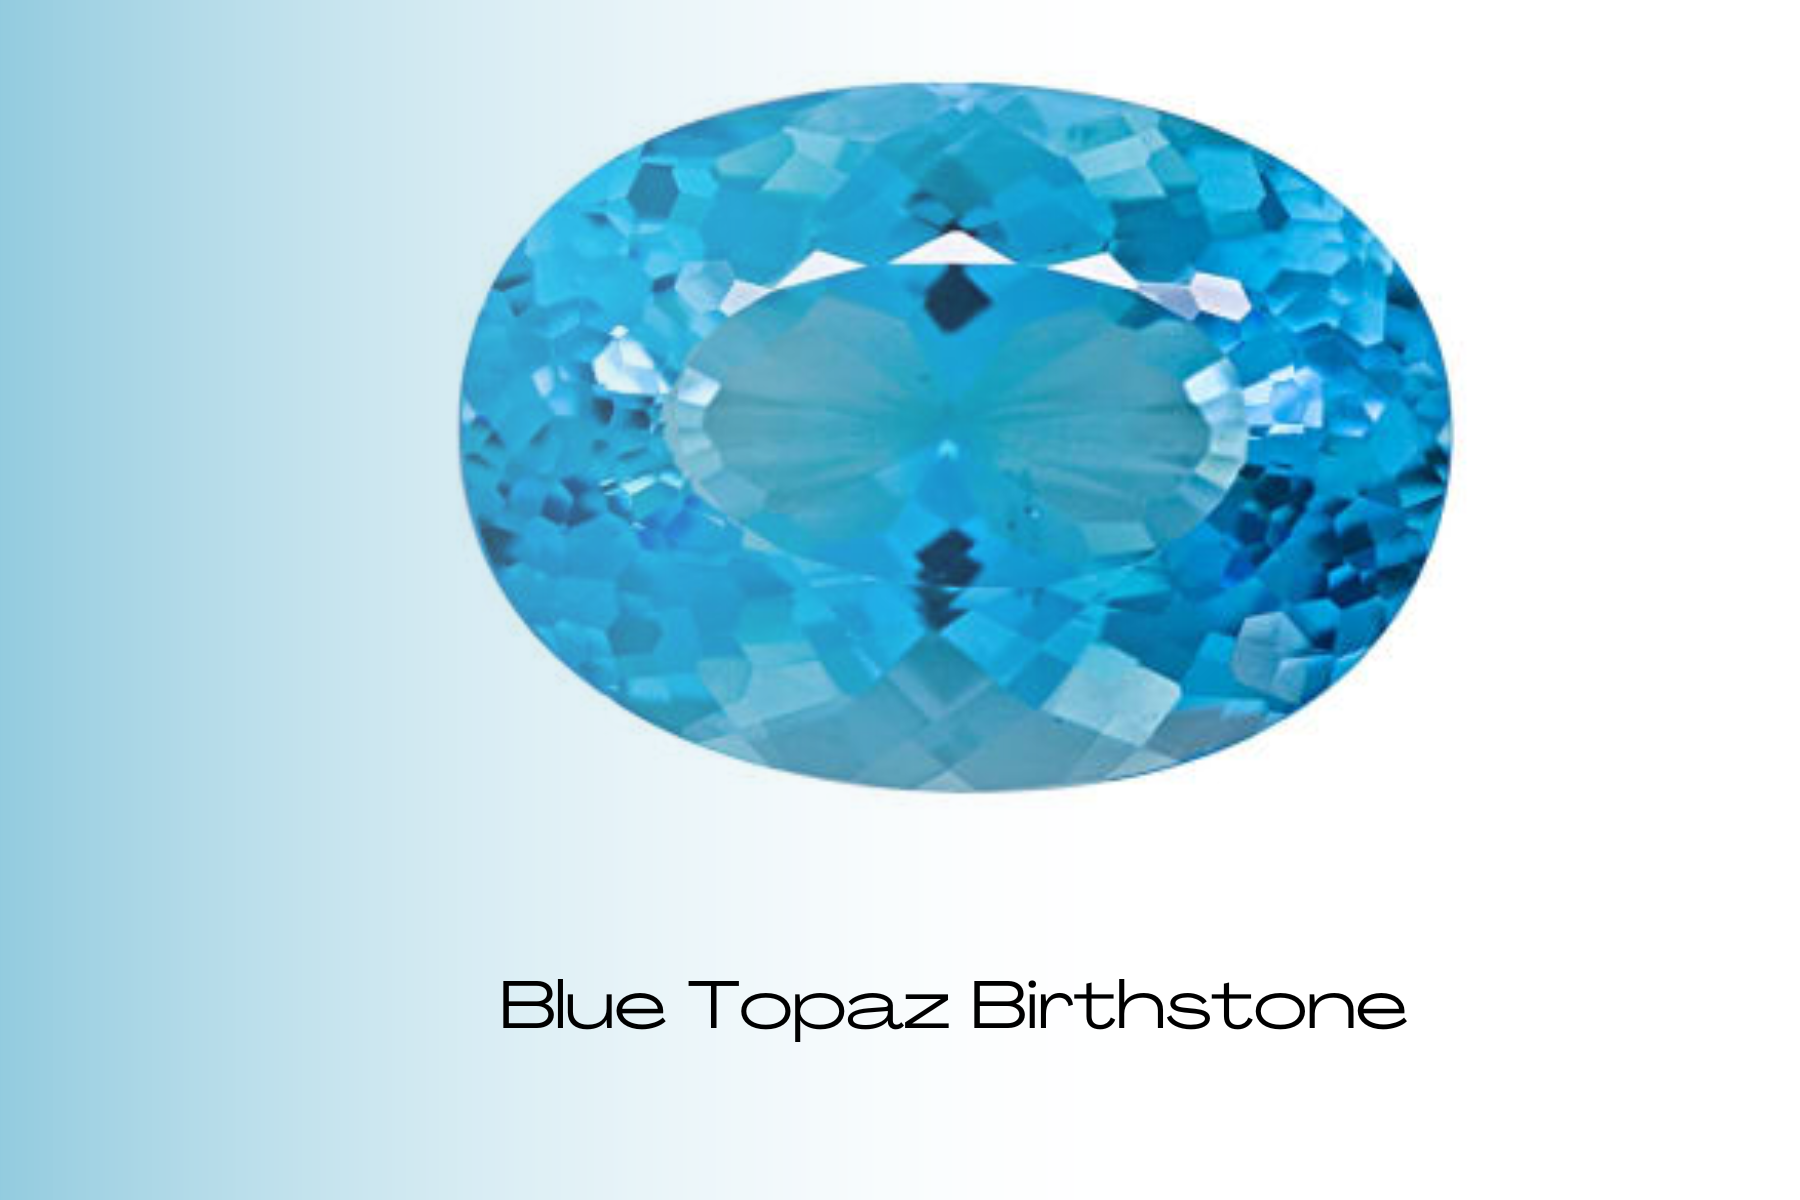 Oblong blue topaz stone